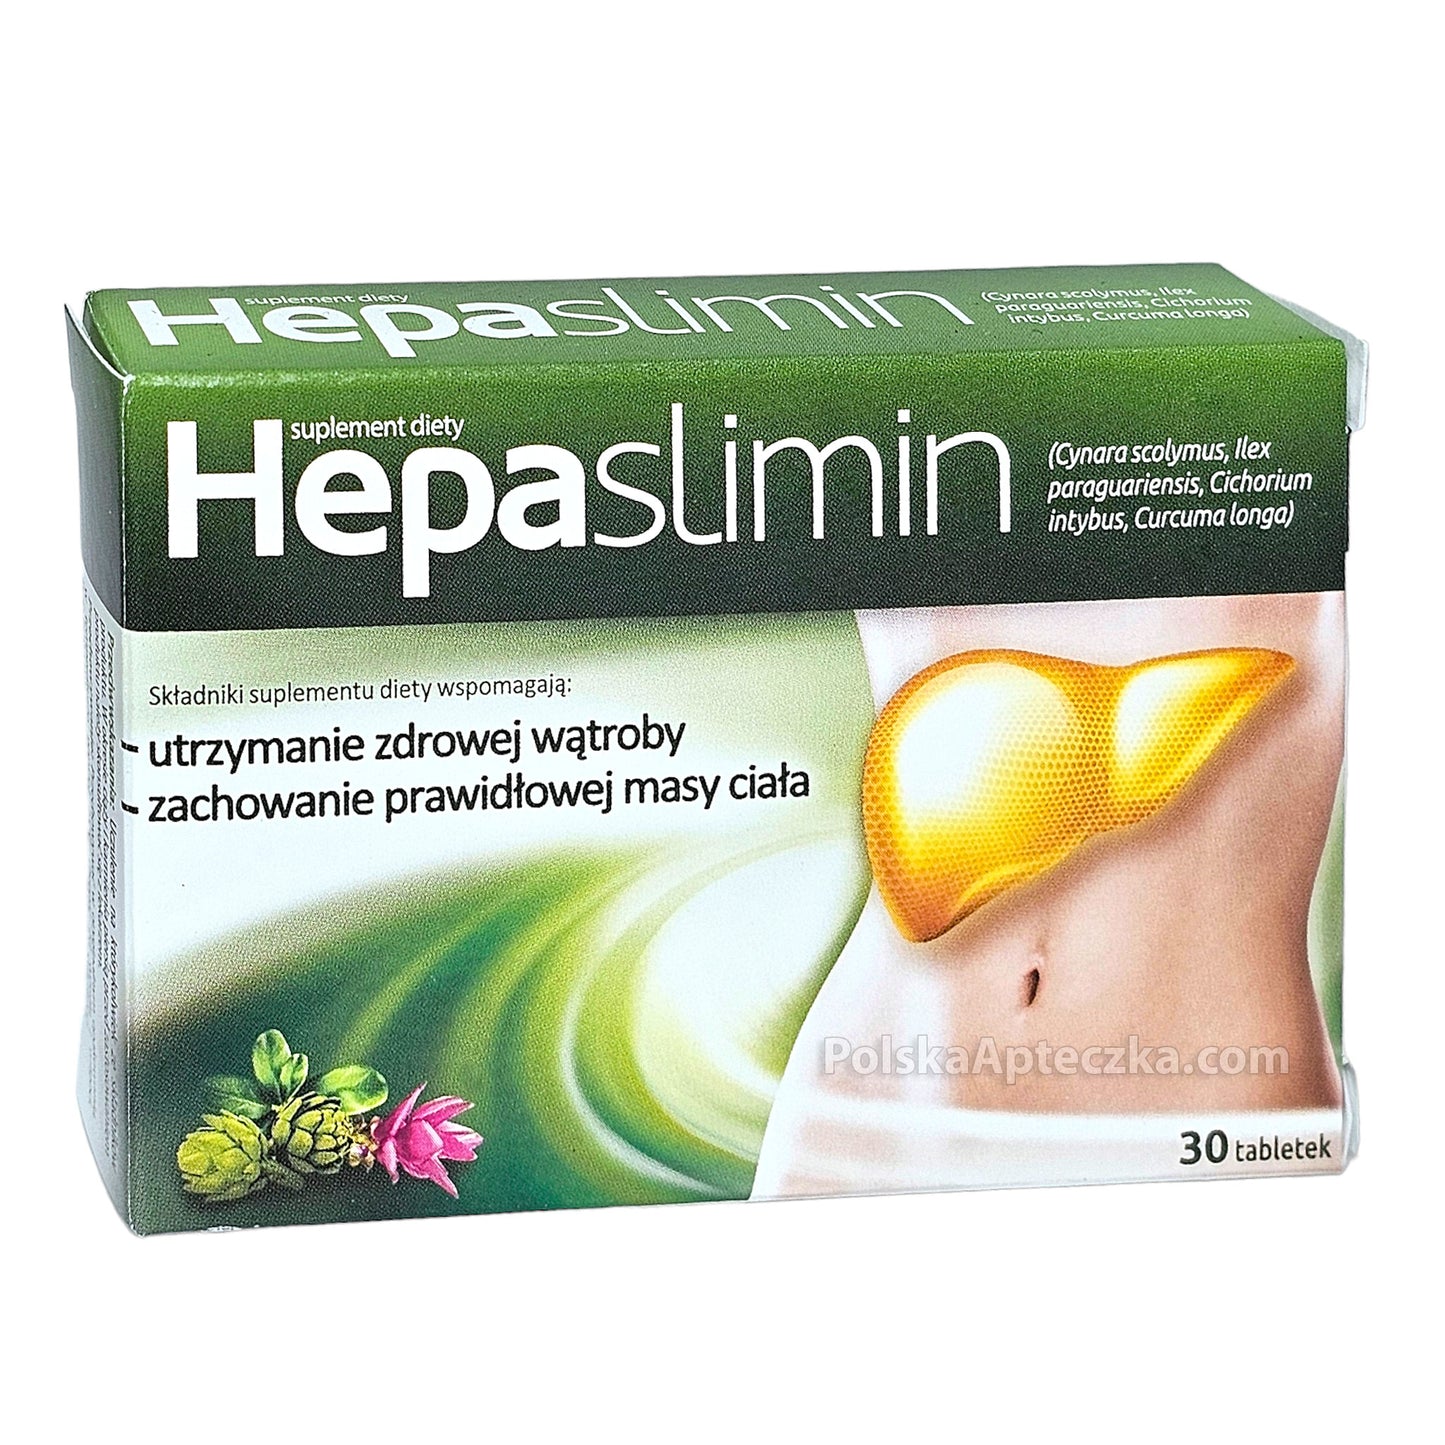 hepaslimin tablets